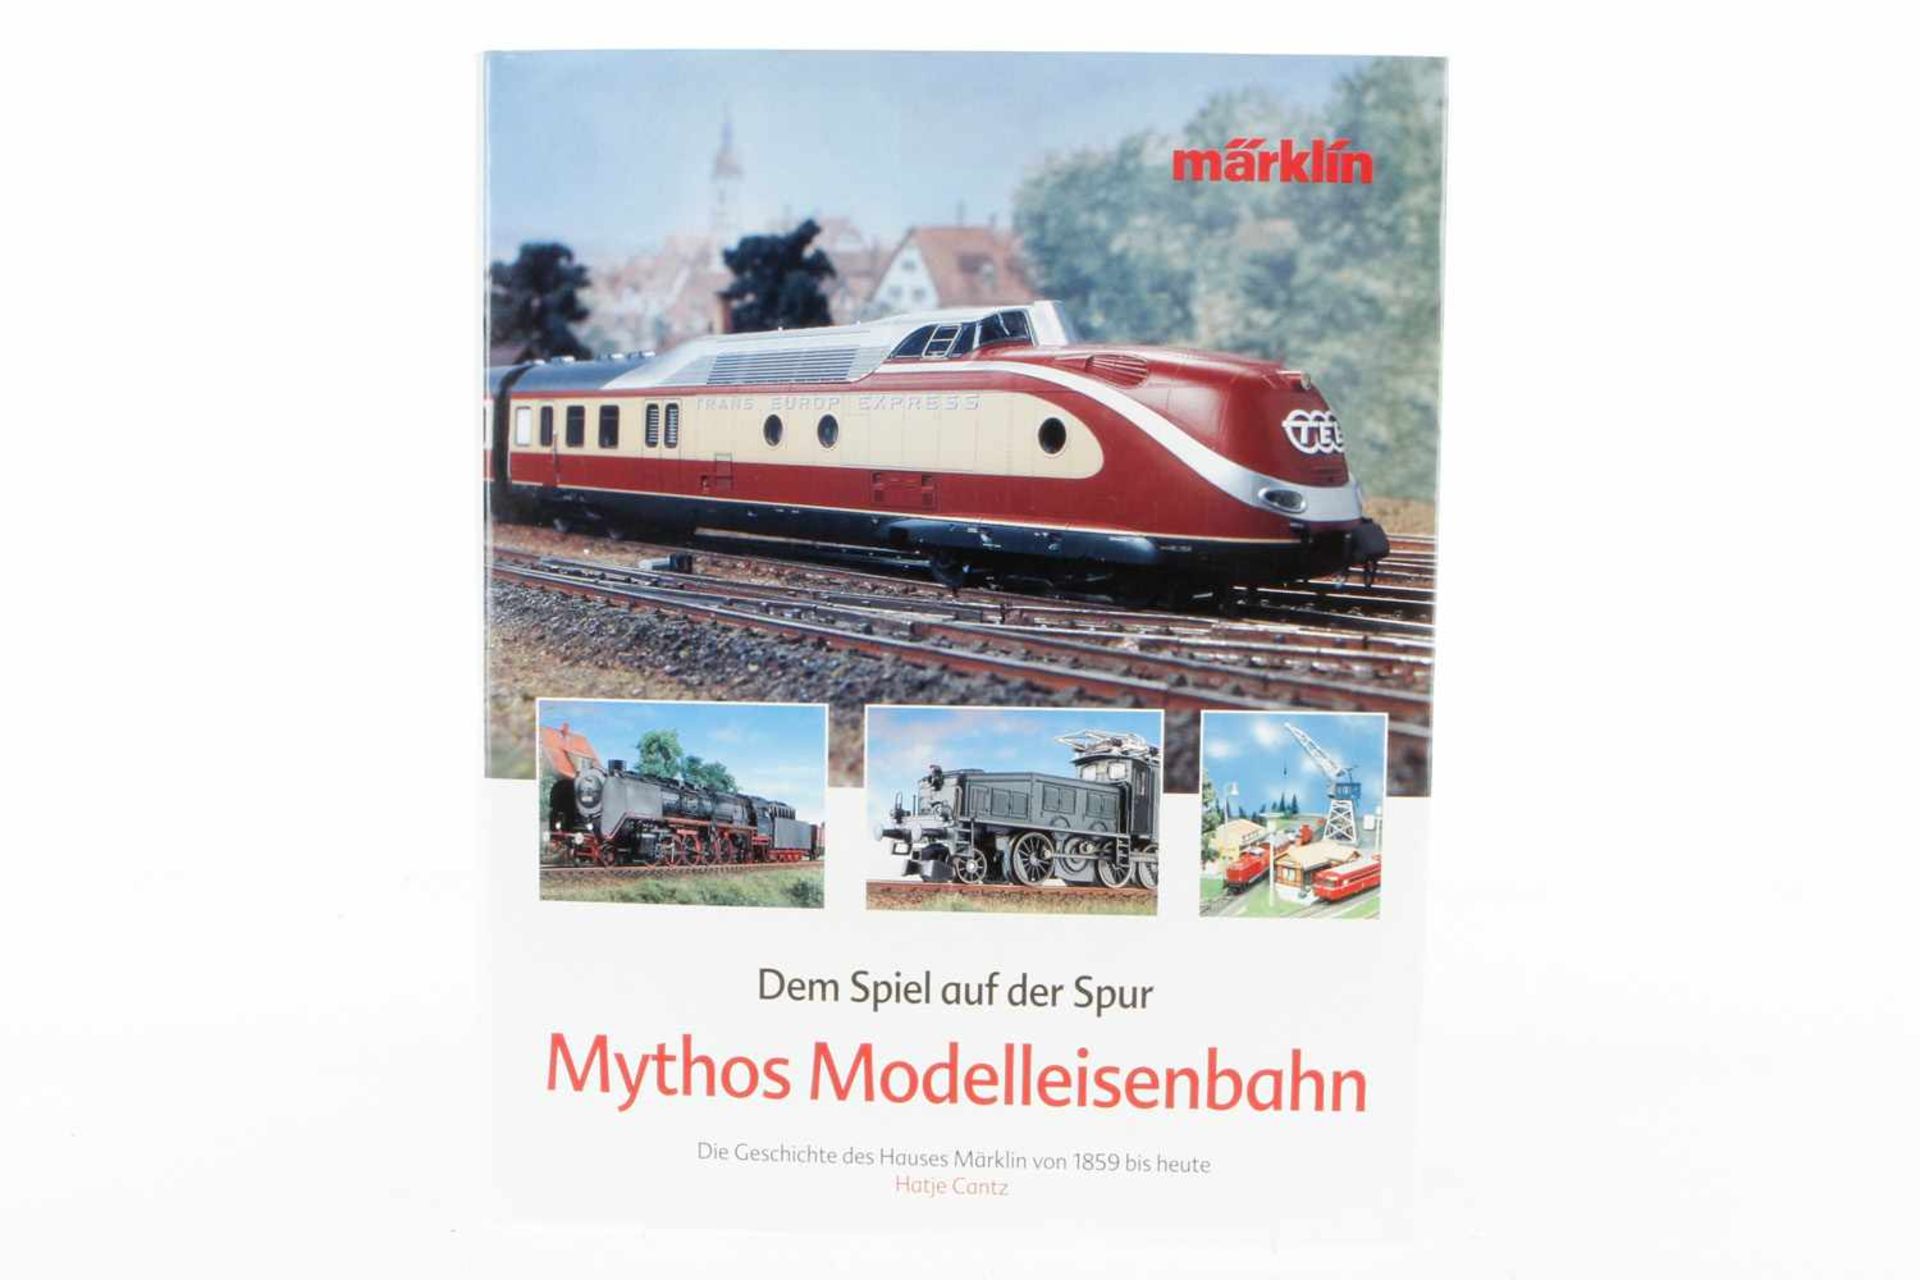 Märklin-Buch "Mythos Modelleisenbahn", Alterungsspuren